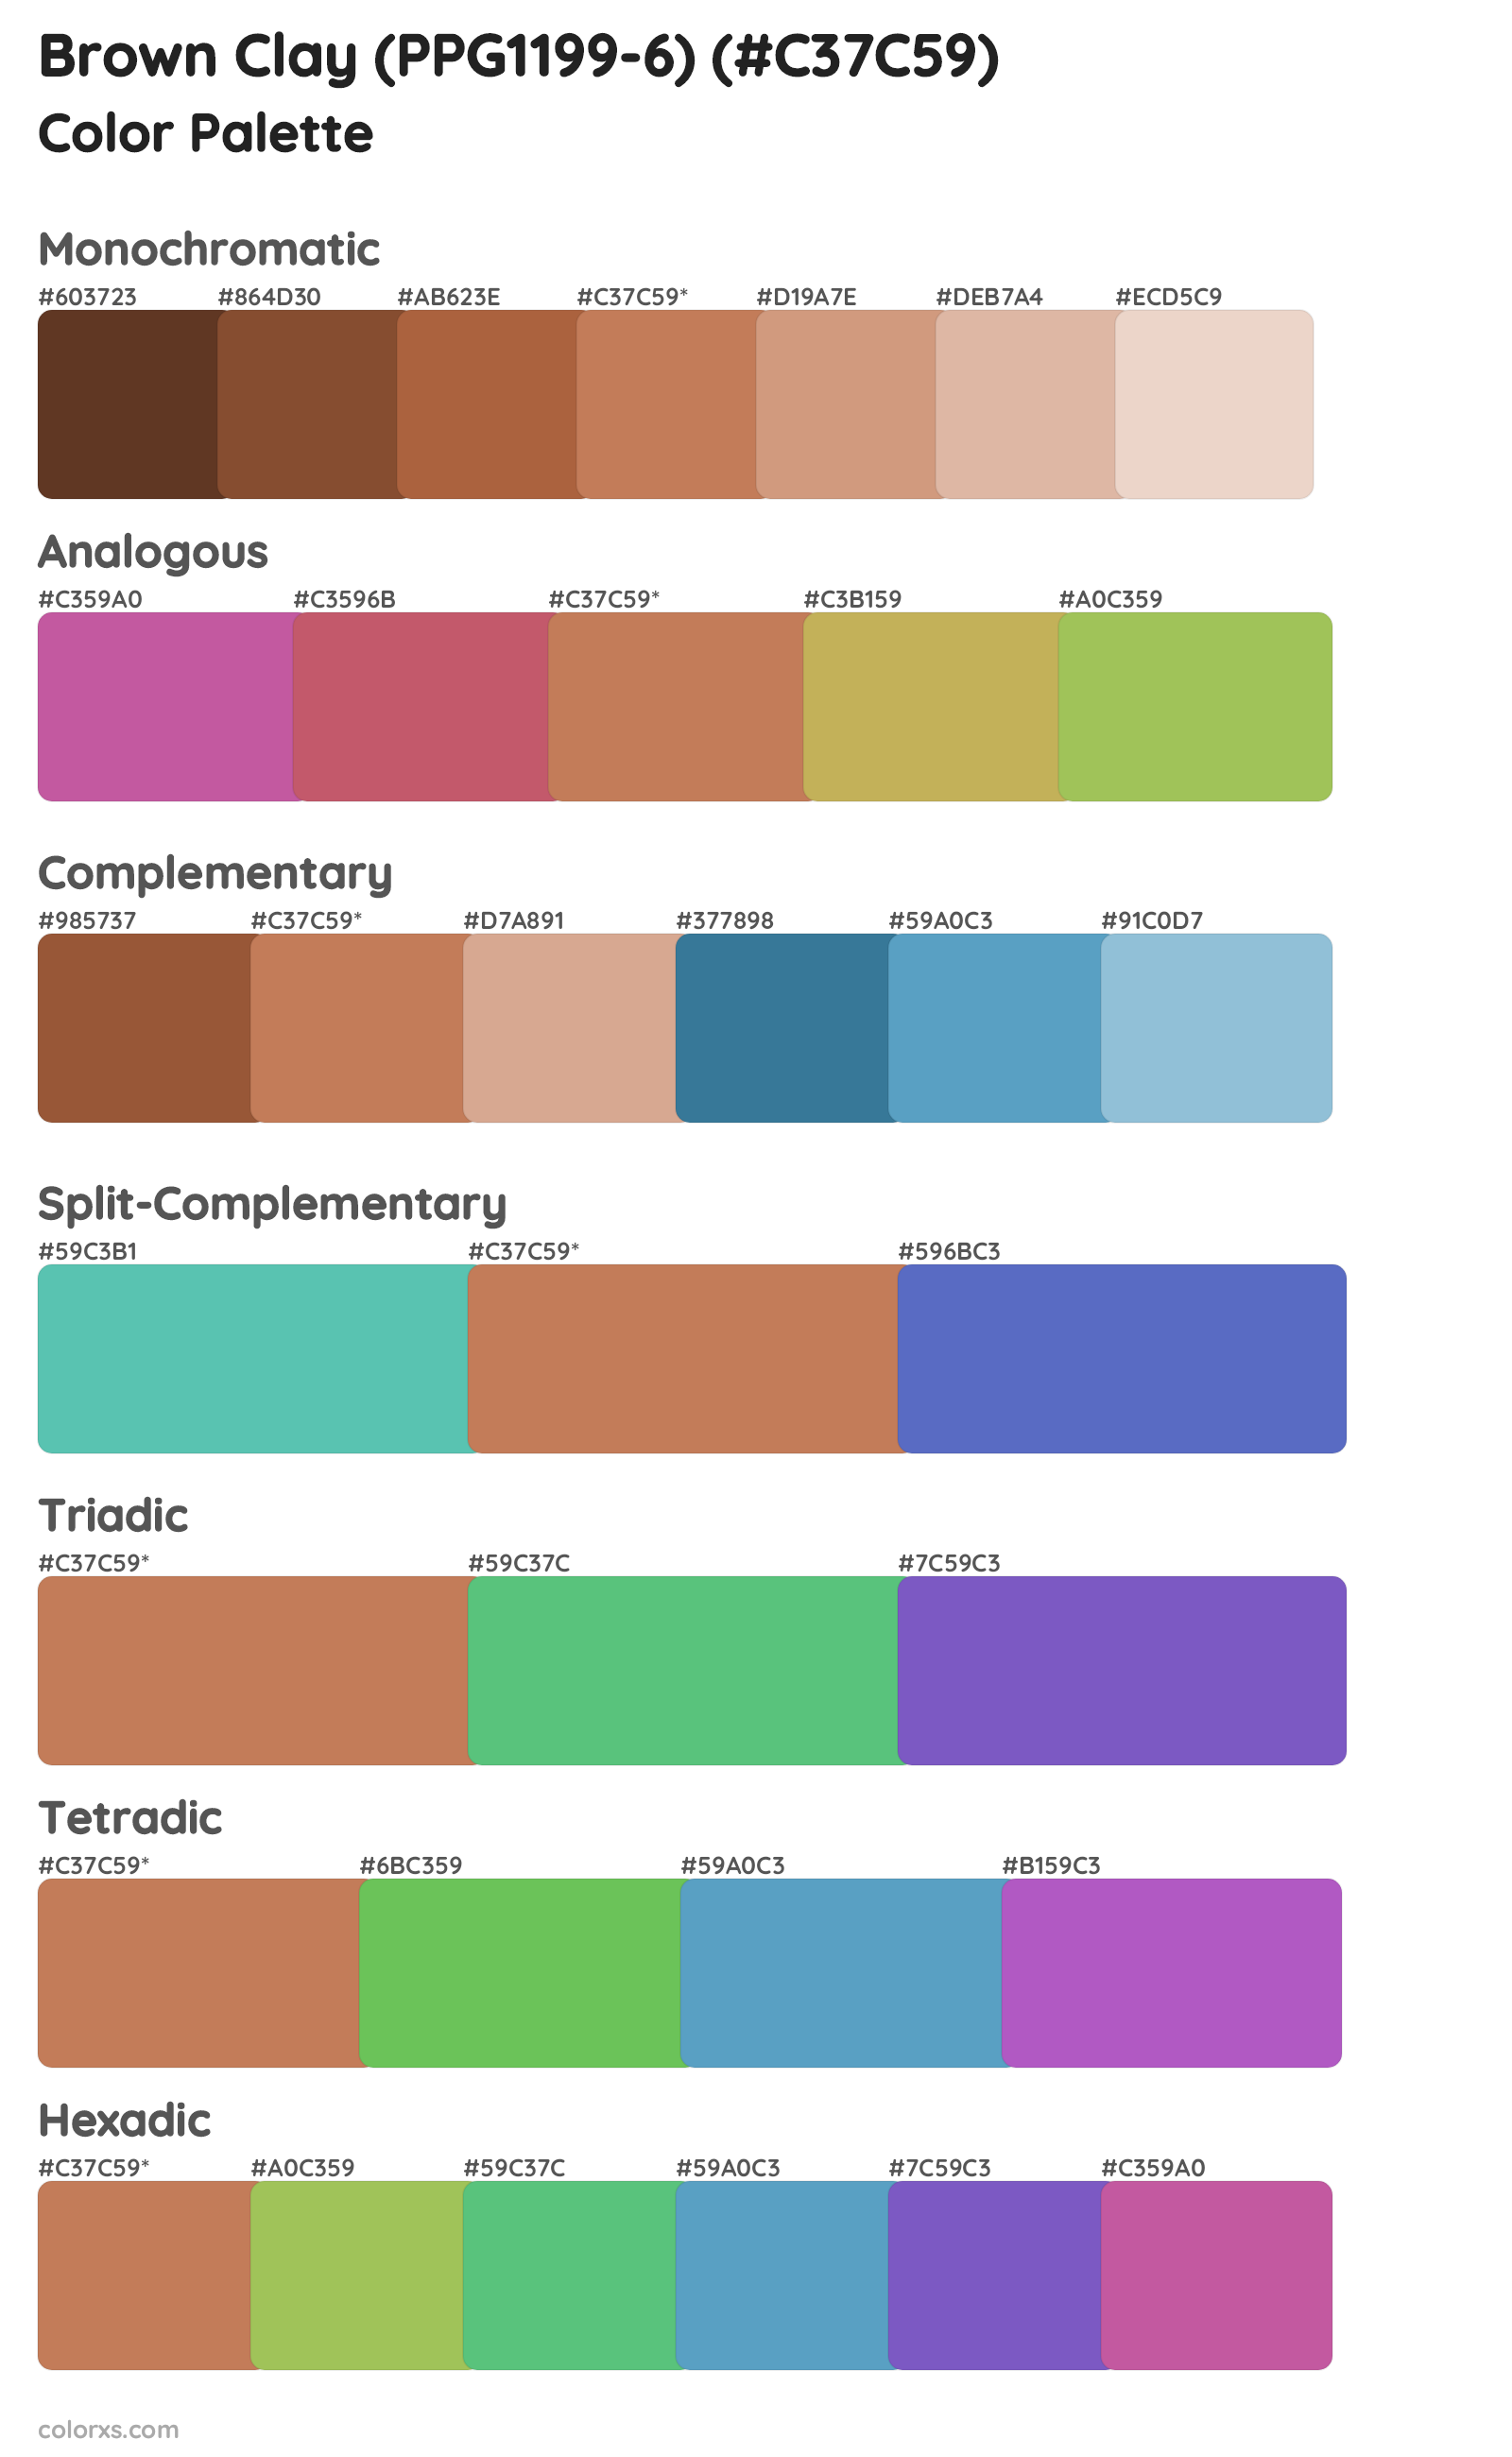 Brown Clay (PPG1199-6) Color Scheme Palettes